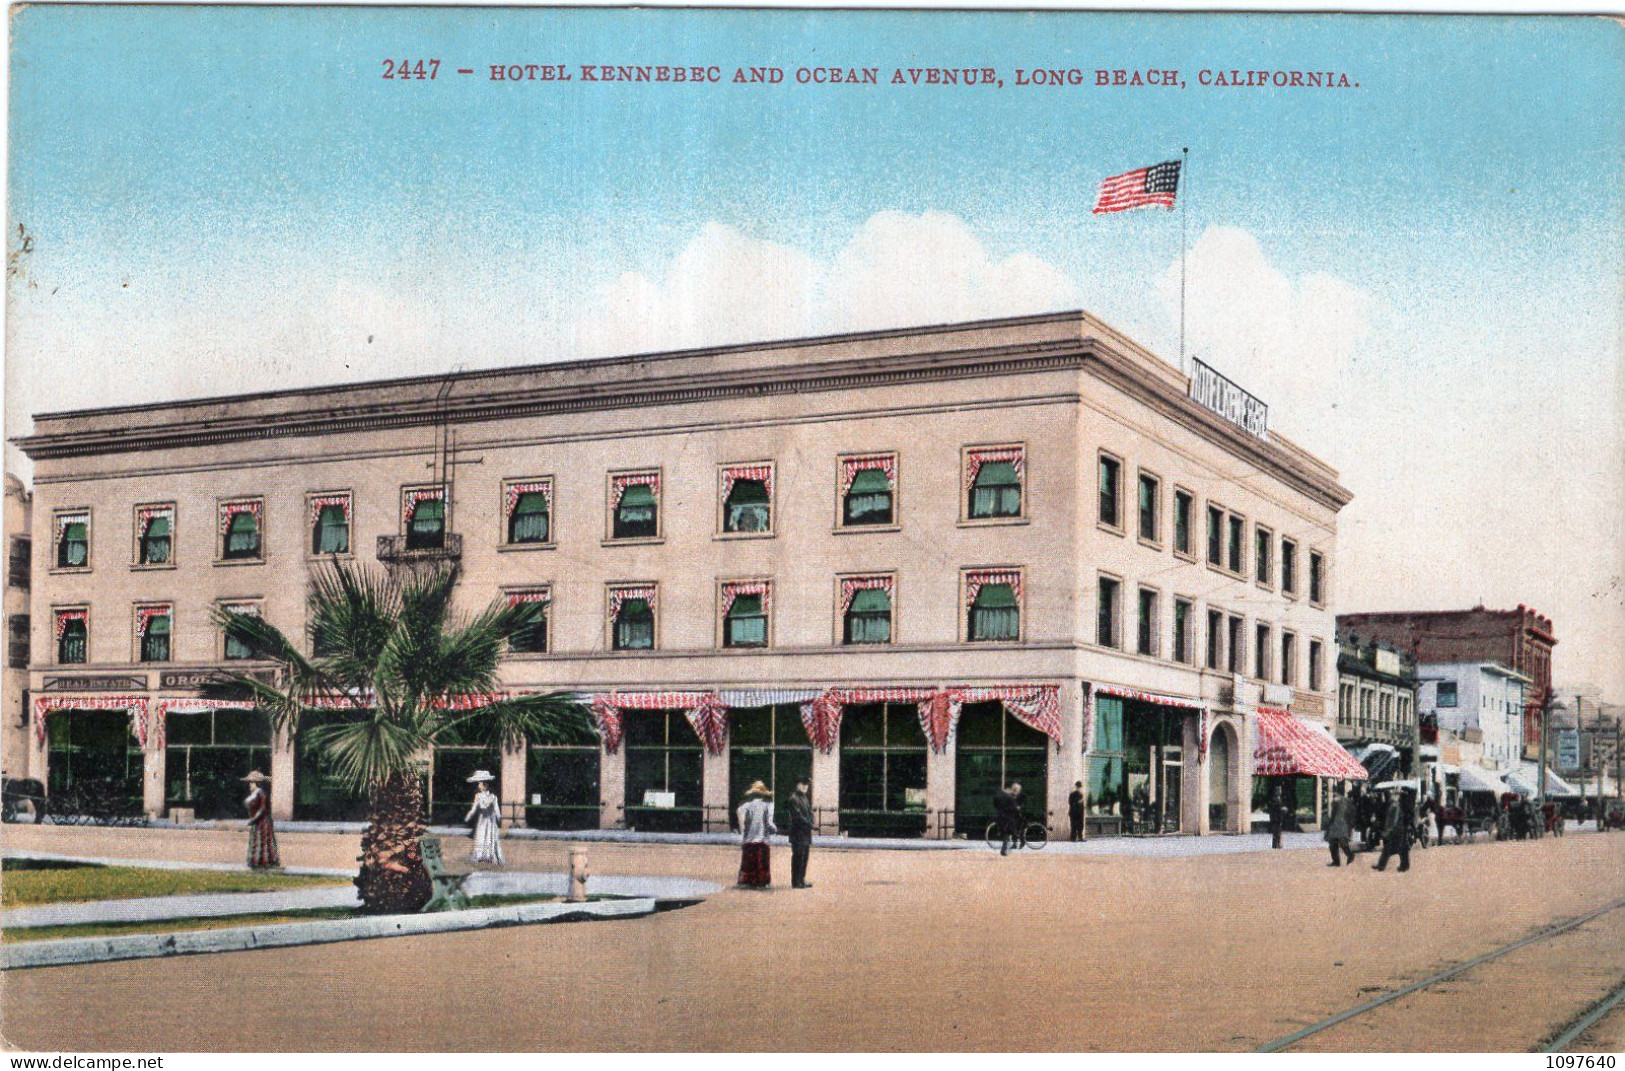 HOTEL KENNEBERC AND OCEAN AVENUE, LONG BEACH, CALIFORNIA - Long Beach